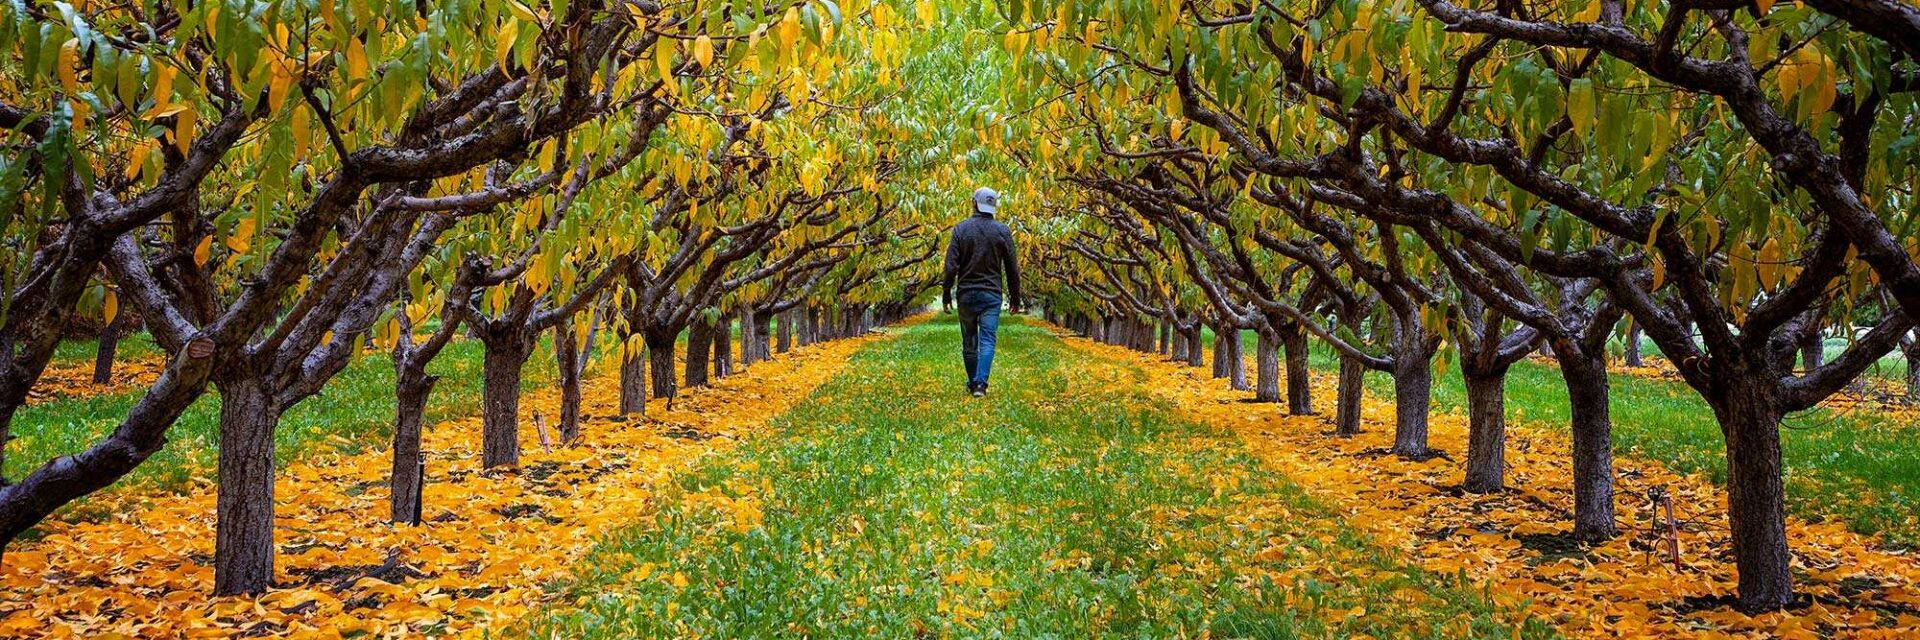 Fall orchard